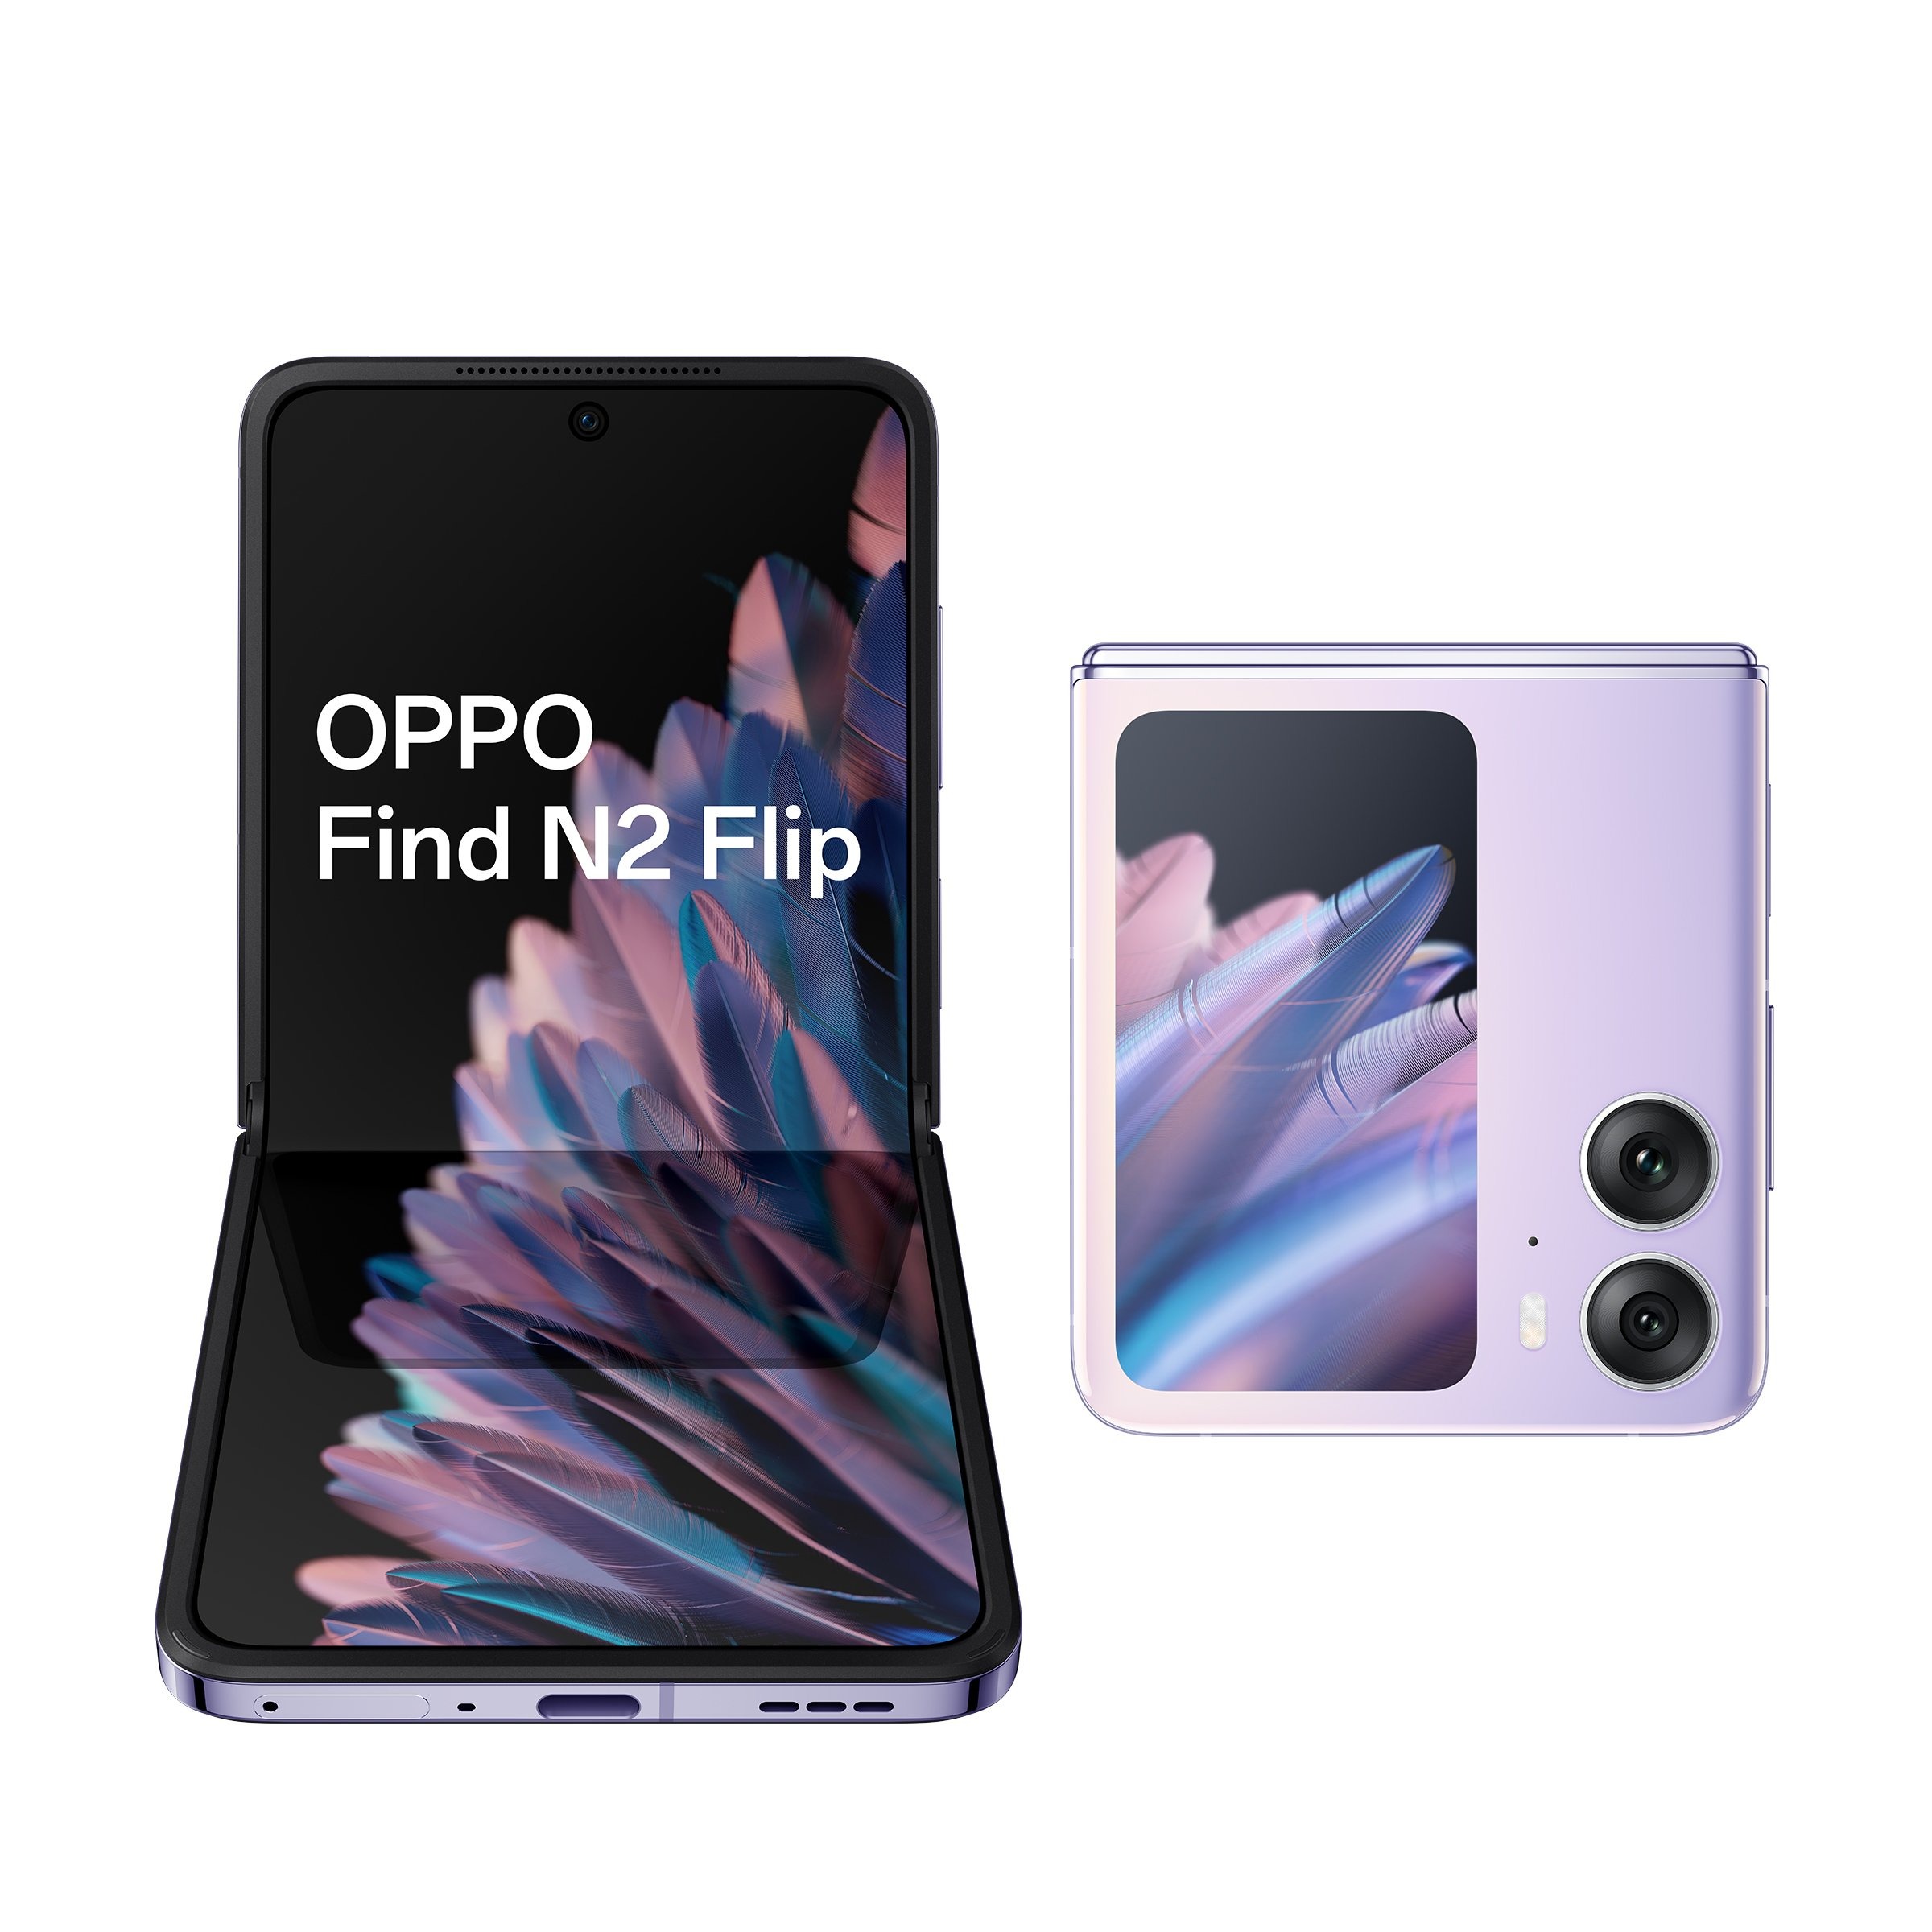 Oppo Find N2 Flip specs detail display, camera, more